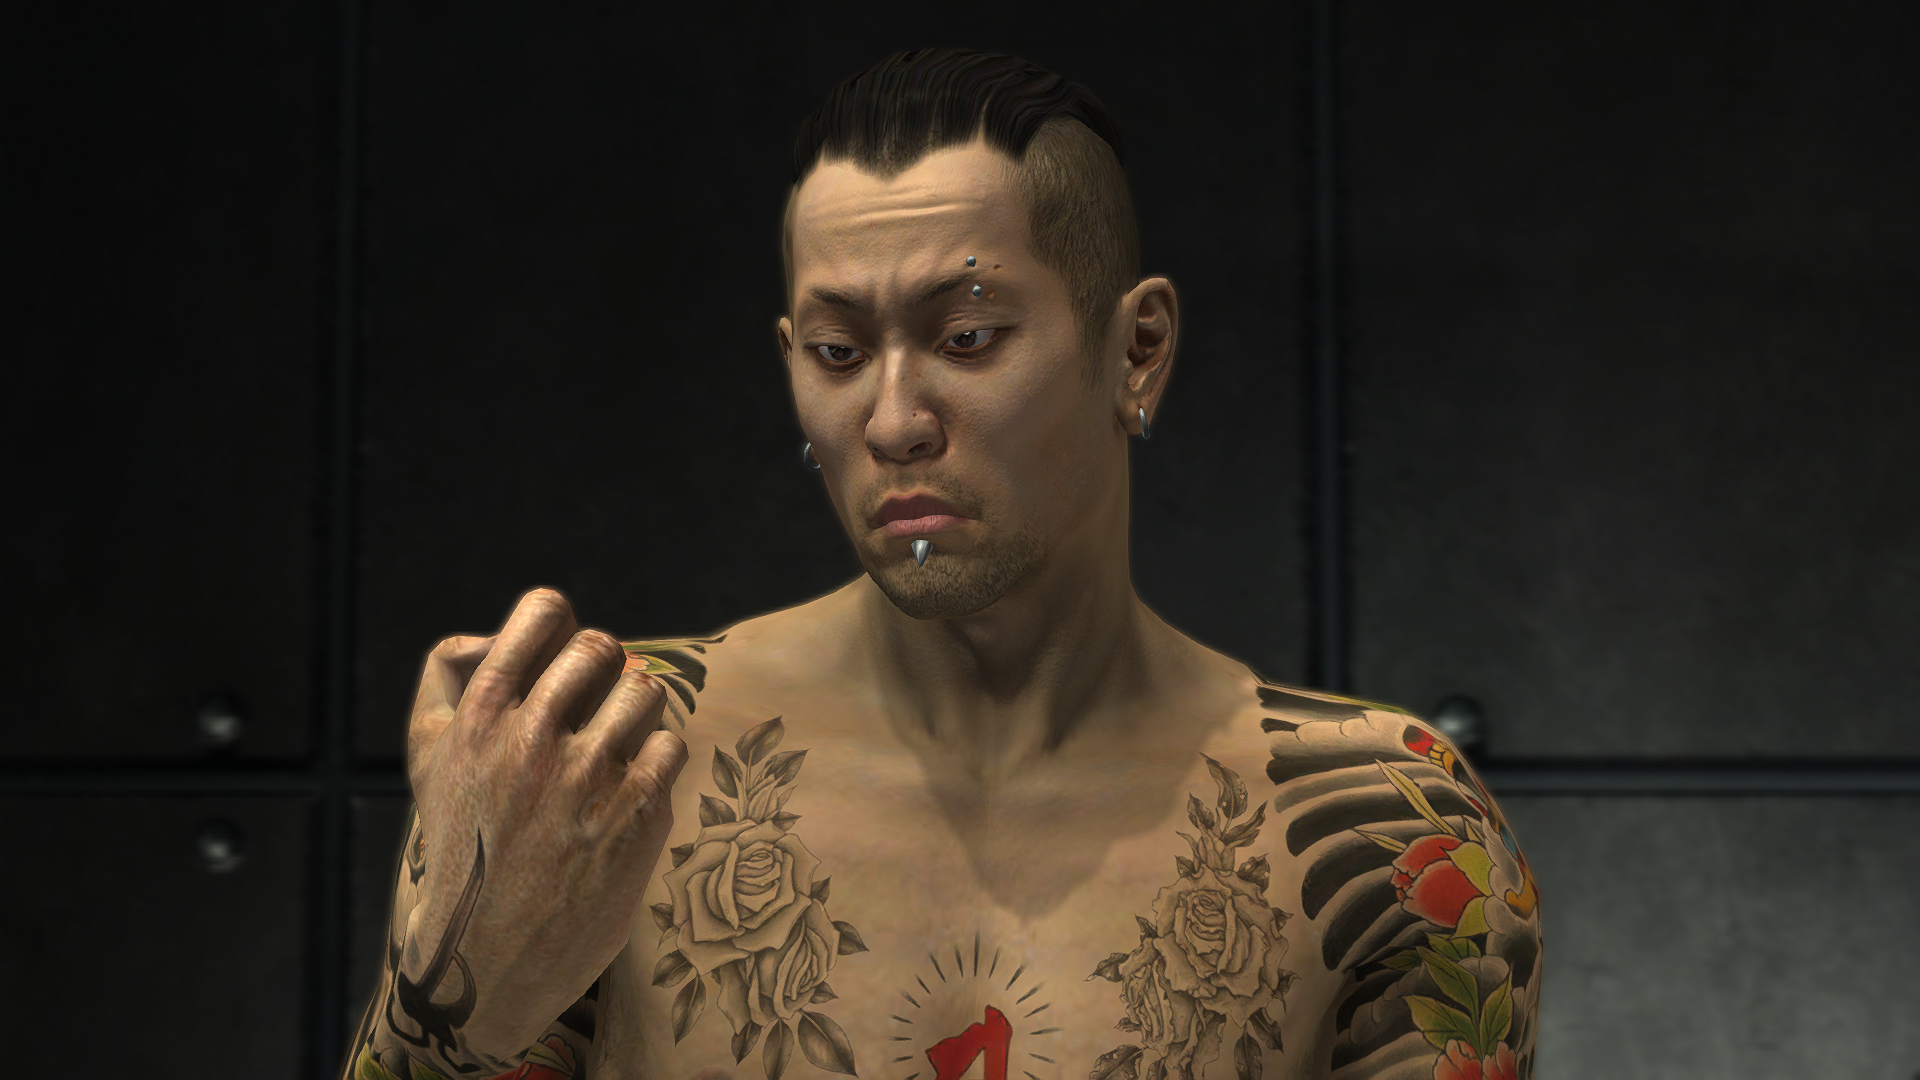 Tattoos in Yakuza culture  10 Masters